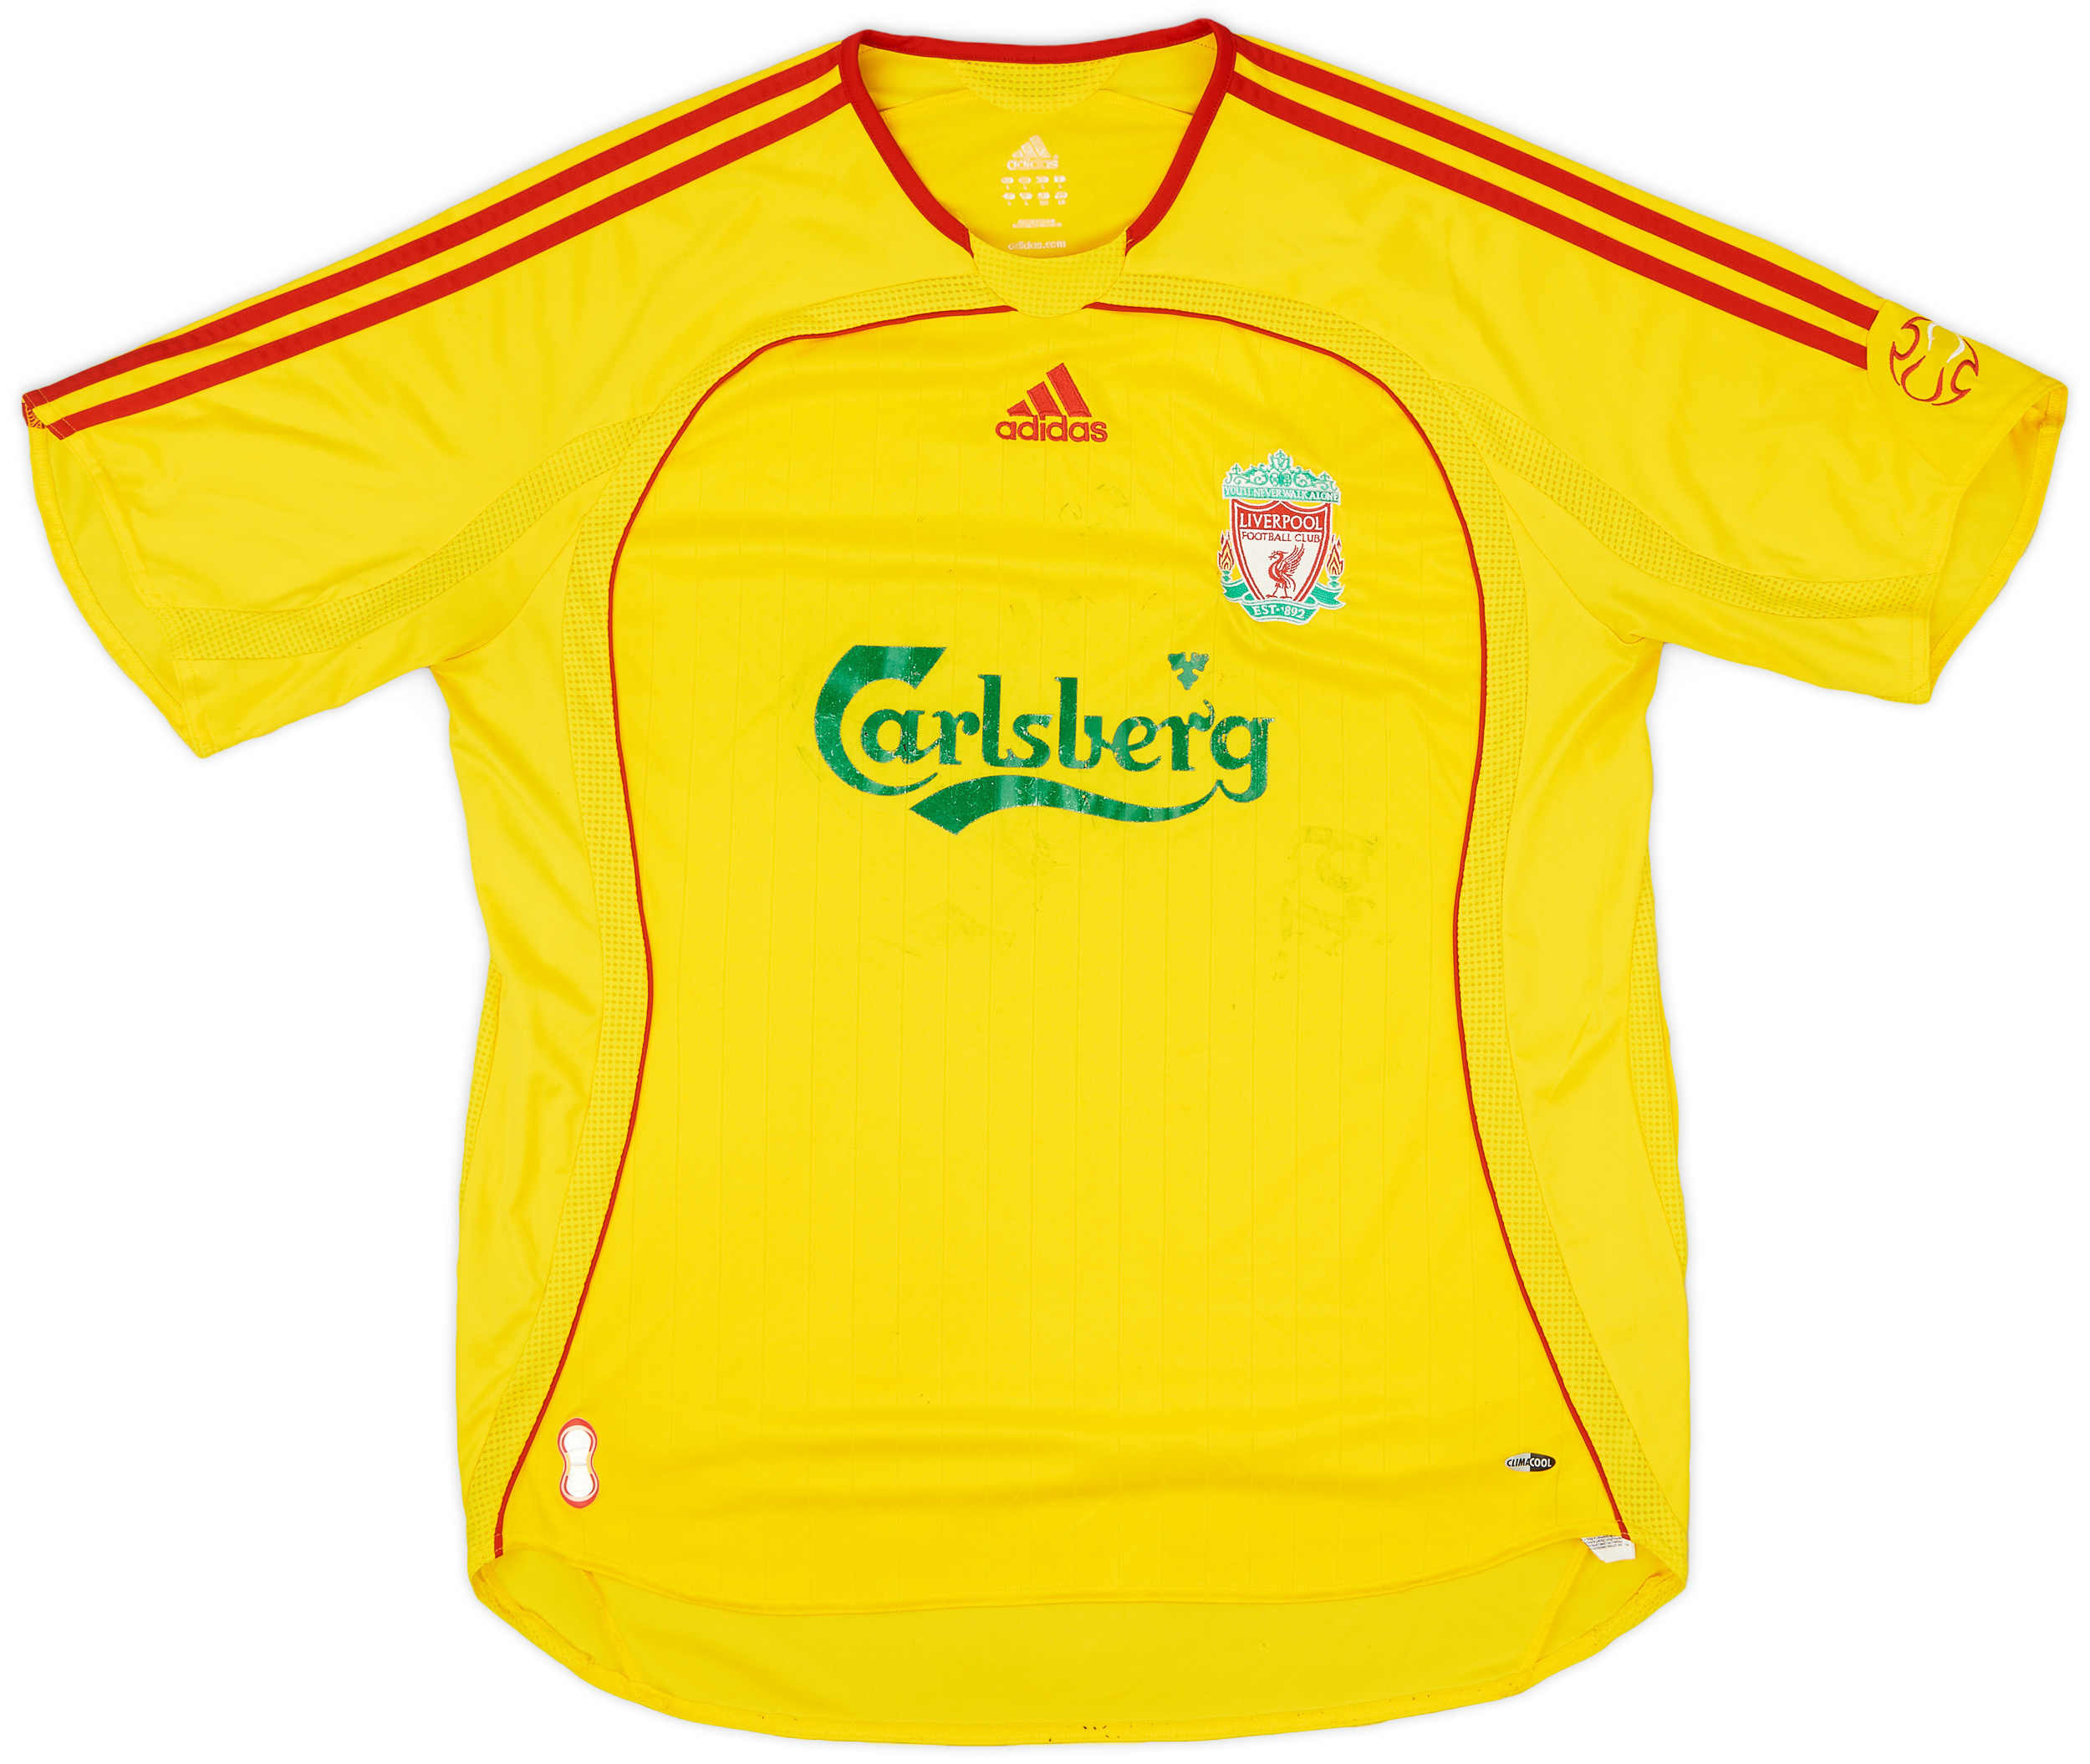 2006-07 Liverpool Away Shirt - 4/10 - ()